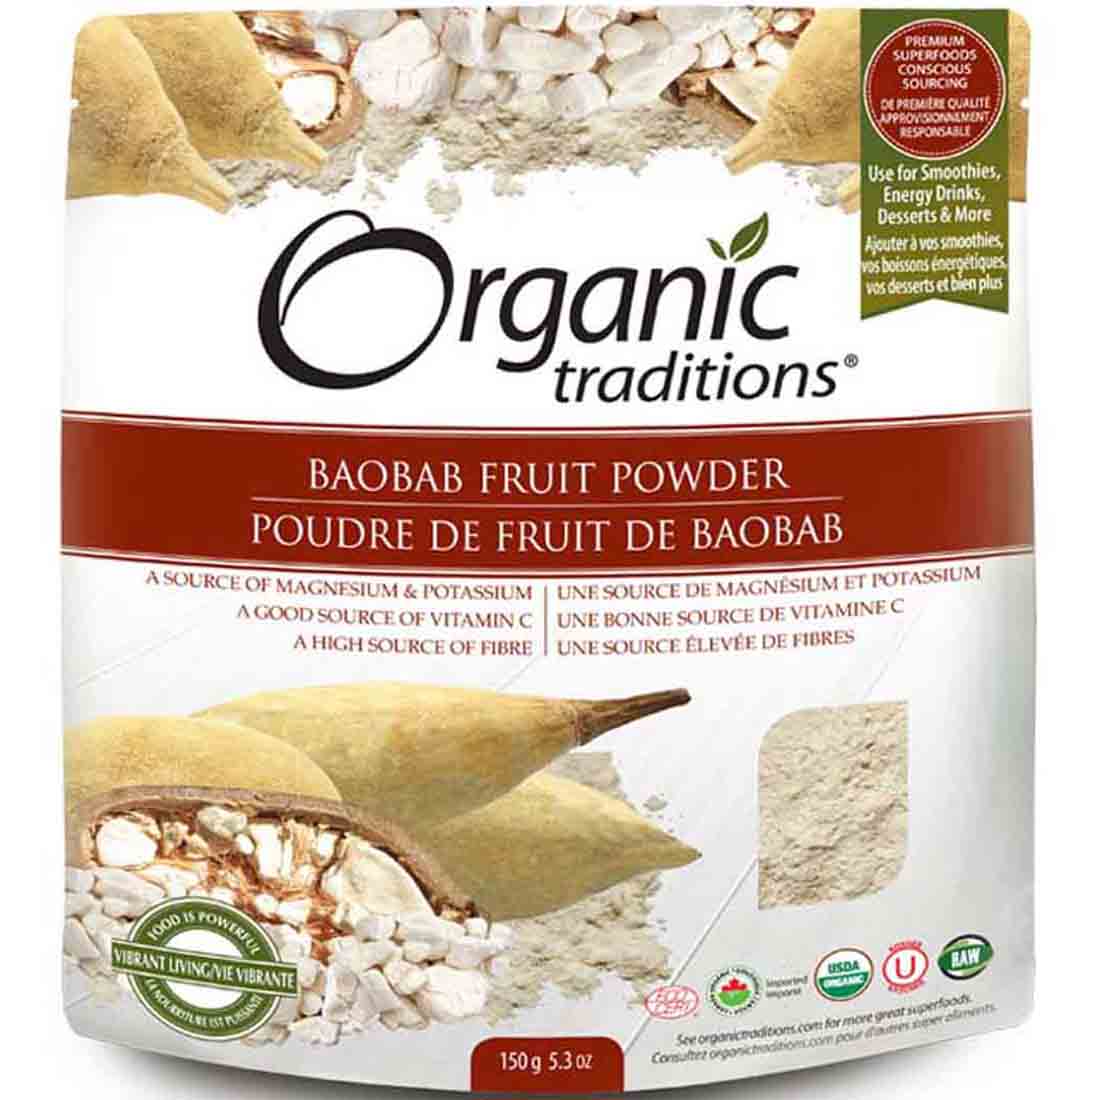 Organic Traditions Baobab Fruit Powder, 150g